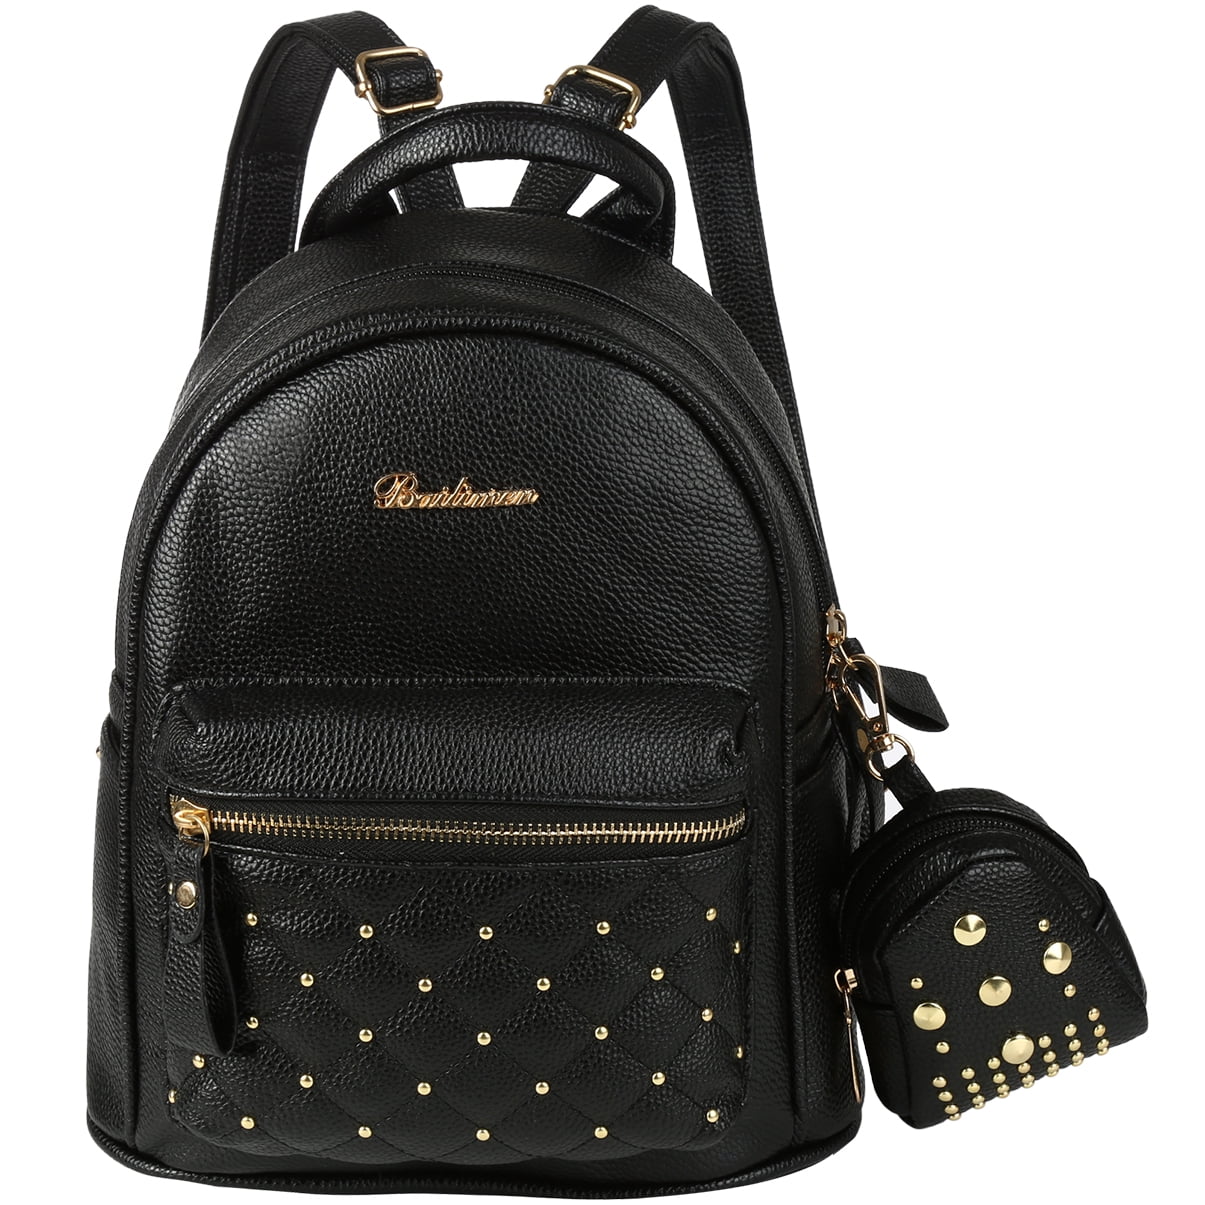 Vbiger 2 in 1 PU Leather Backpack Trendy Travel Shoulders Bag Chic ...